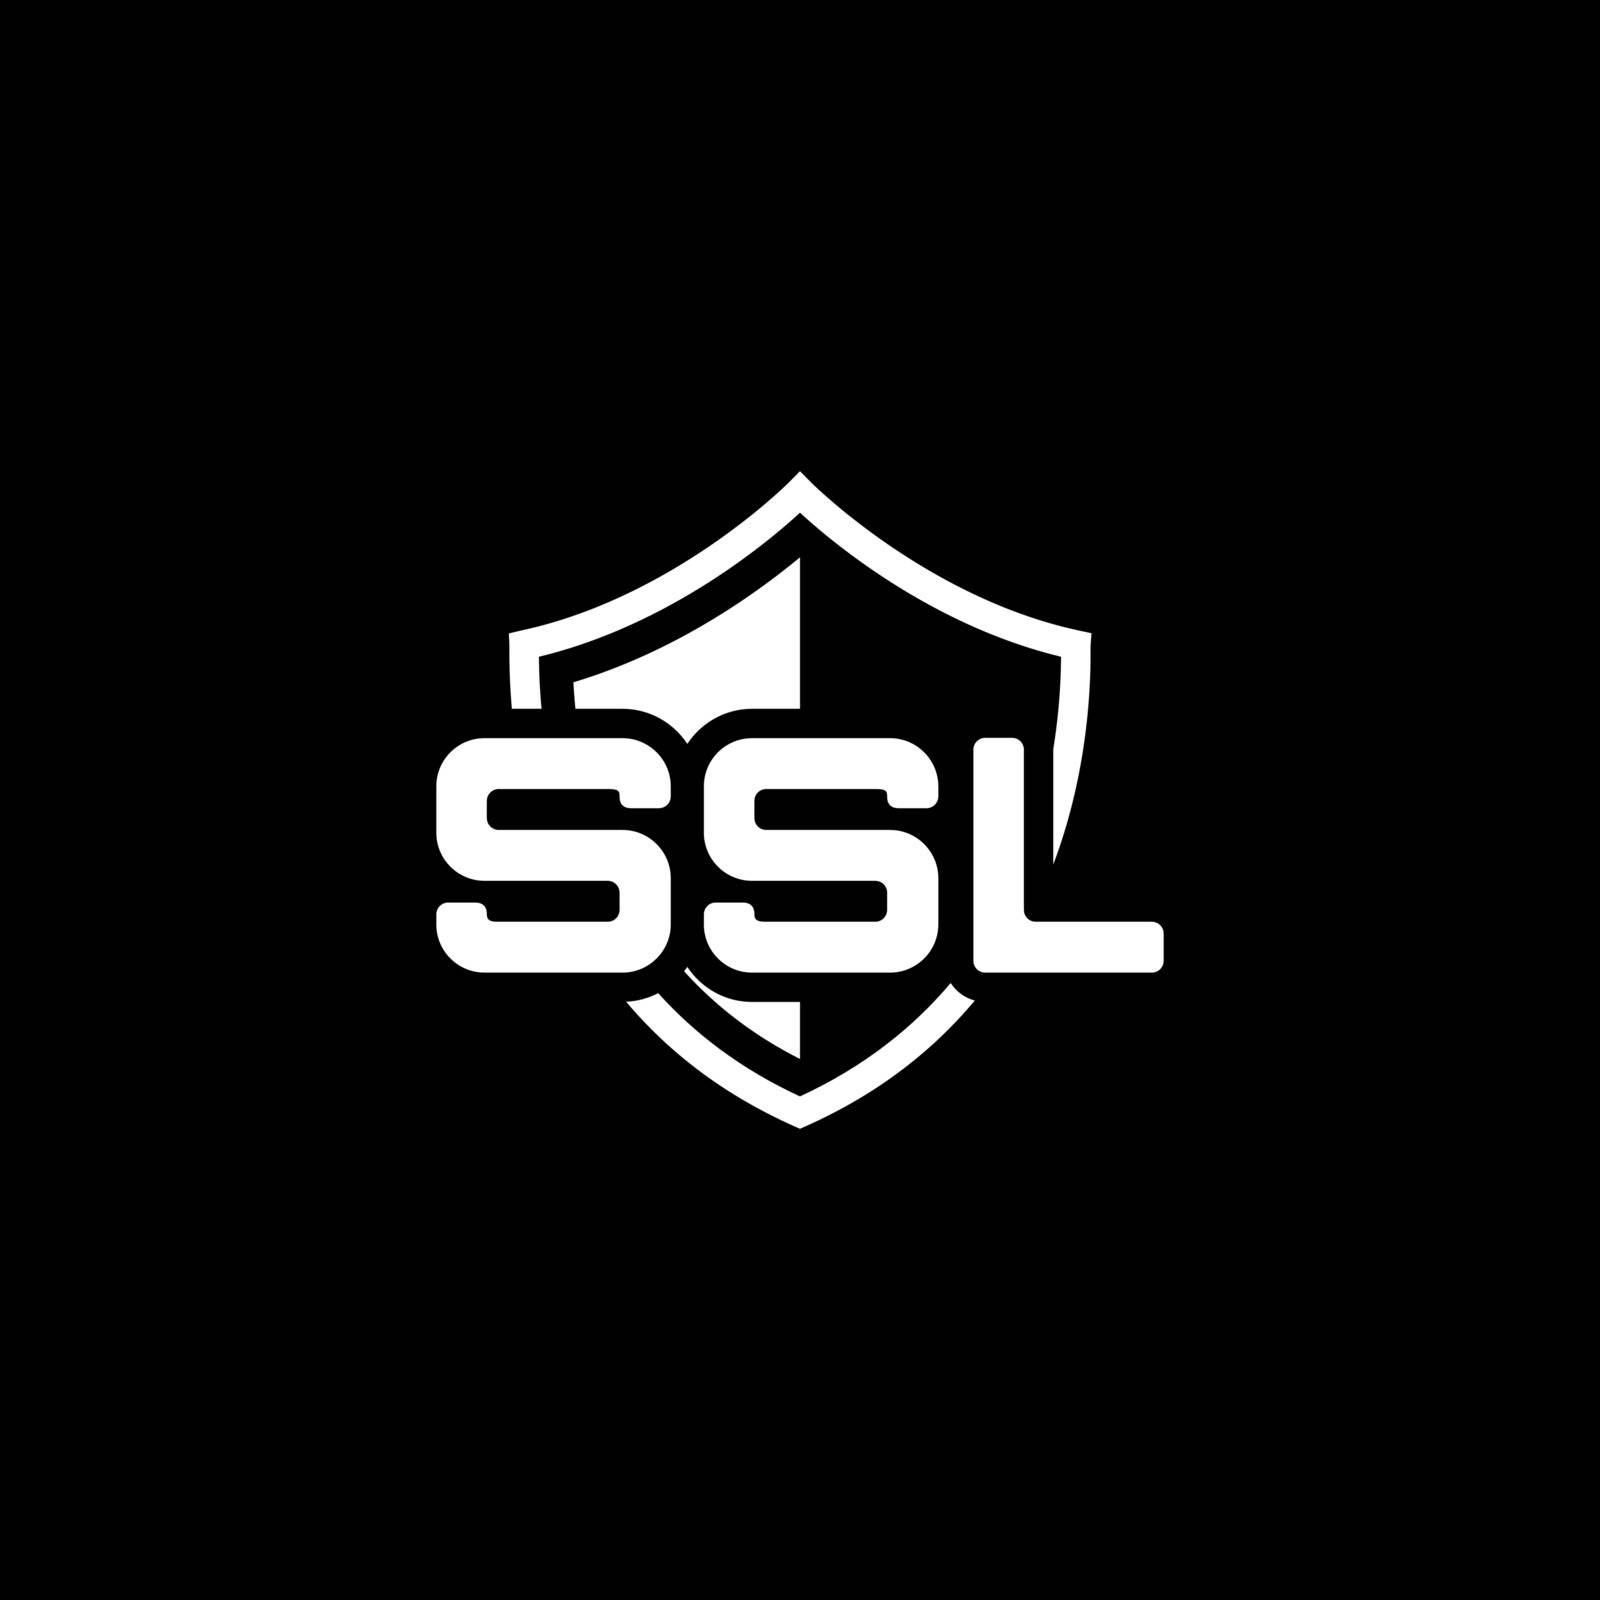 SSL Protection Icon. Flat Design Isolated Illustration.